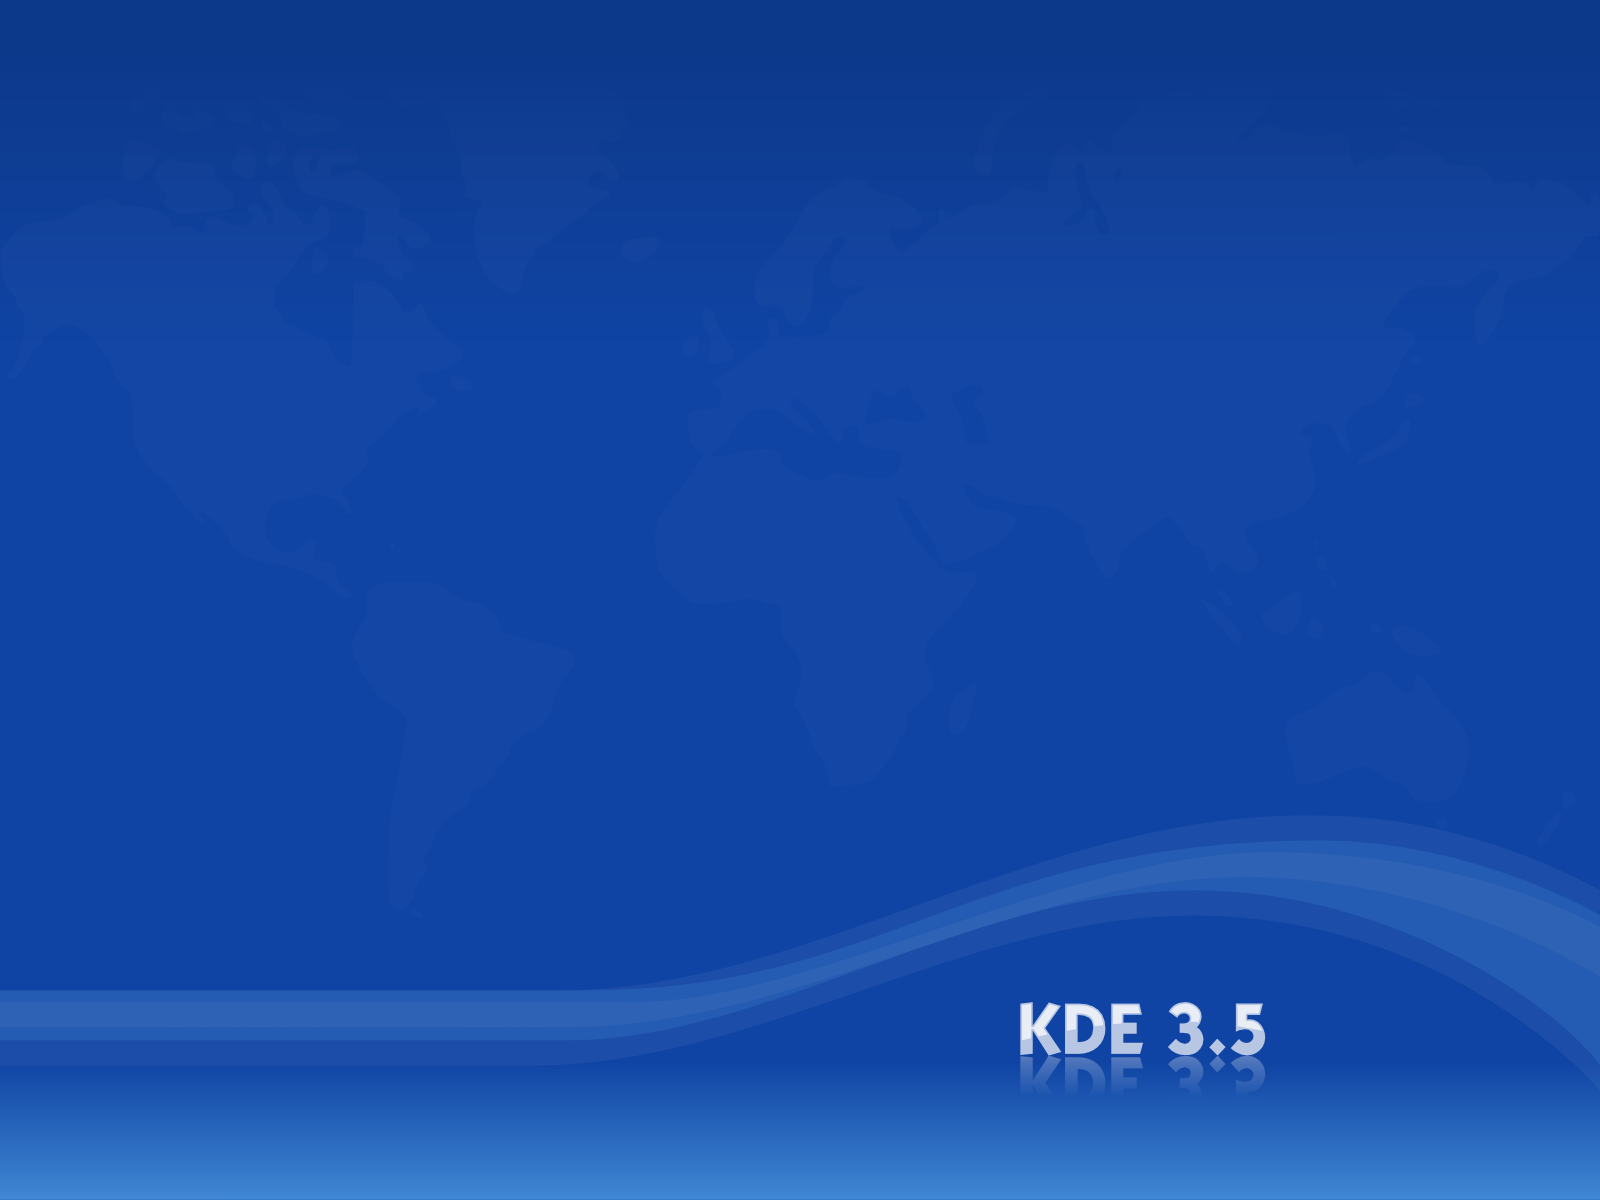 template/.kde/share/apps/kthememanager/themes/original/wallpapers/desktop/KDE34.png